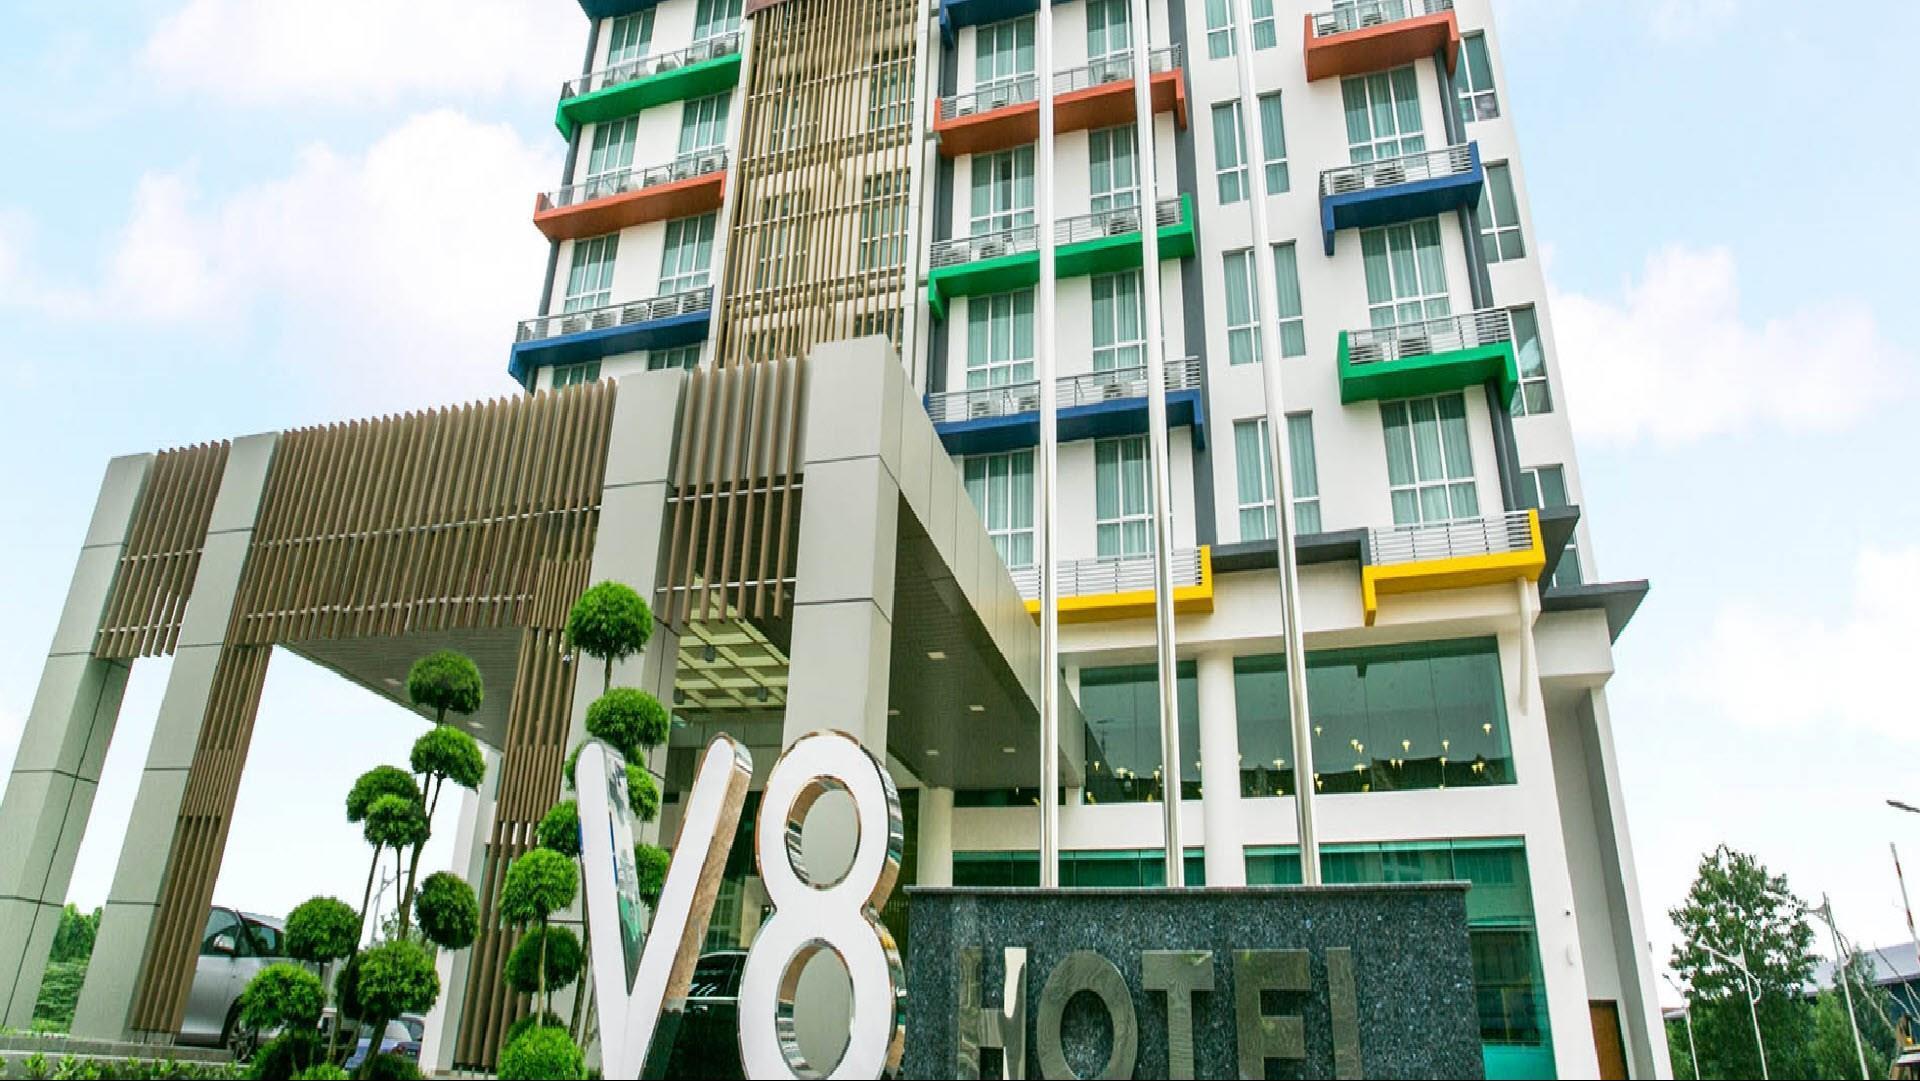 V8 Hotel in Johor, MY